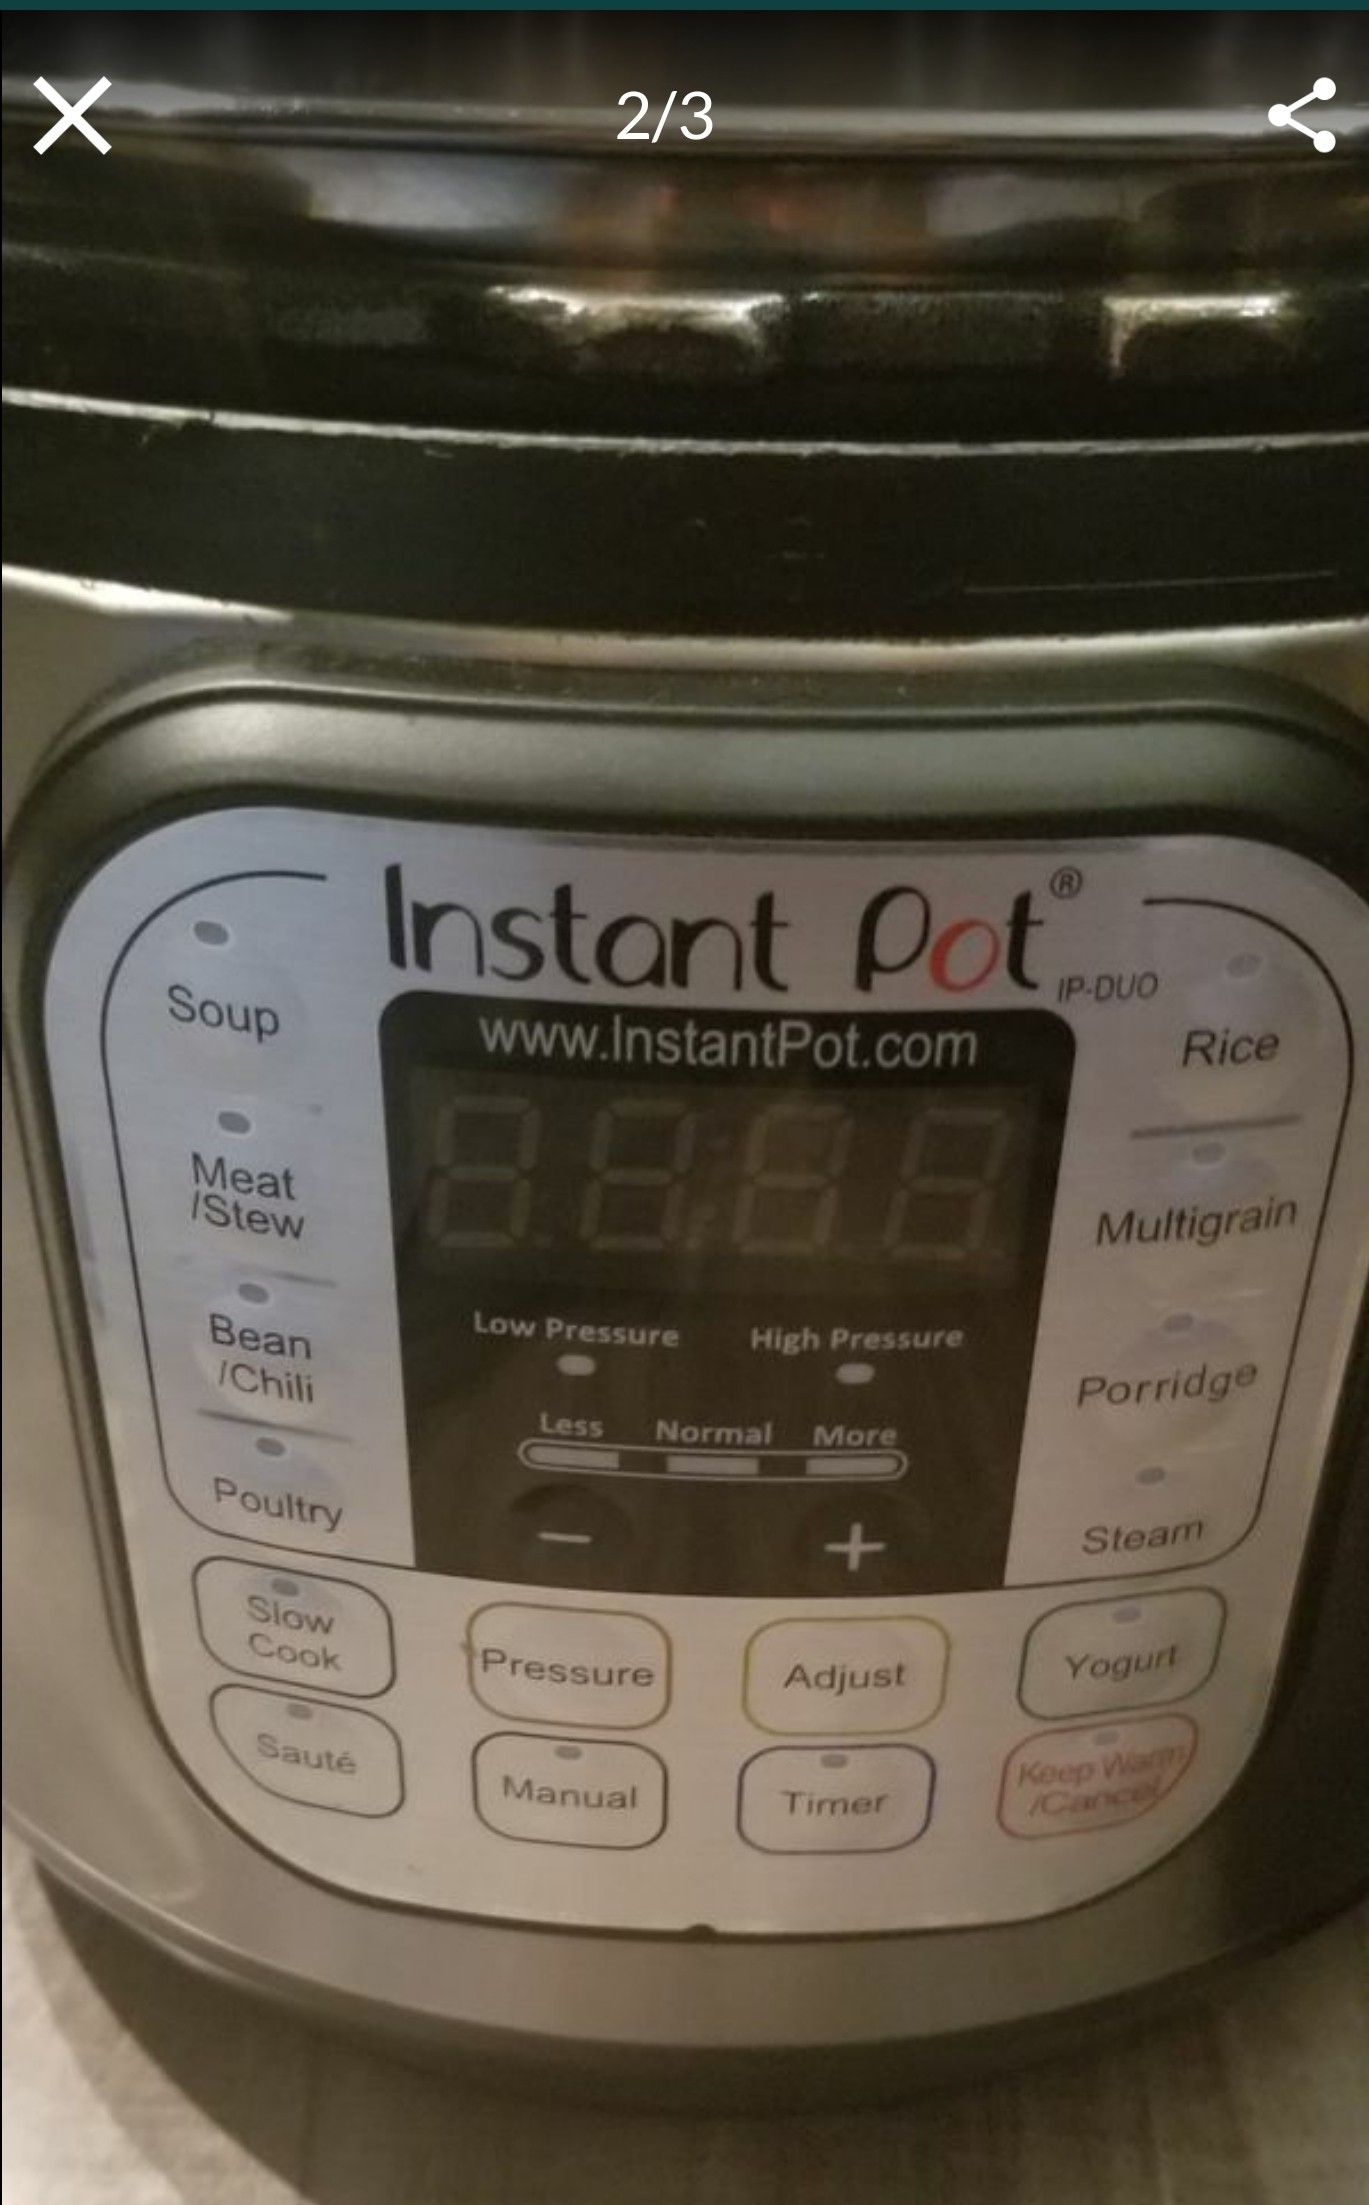 Instant pot 6 Qt 7-in-1 Multi-Use Programmable Pressure Cooker, Slow Cooker, Rice Cooker, Steamer, Sauté, Yogurt Maker and Warmer